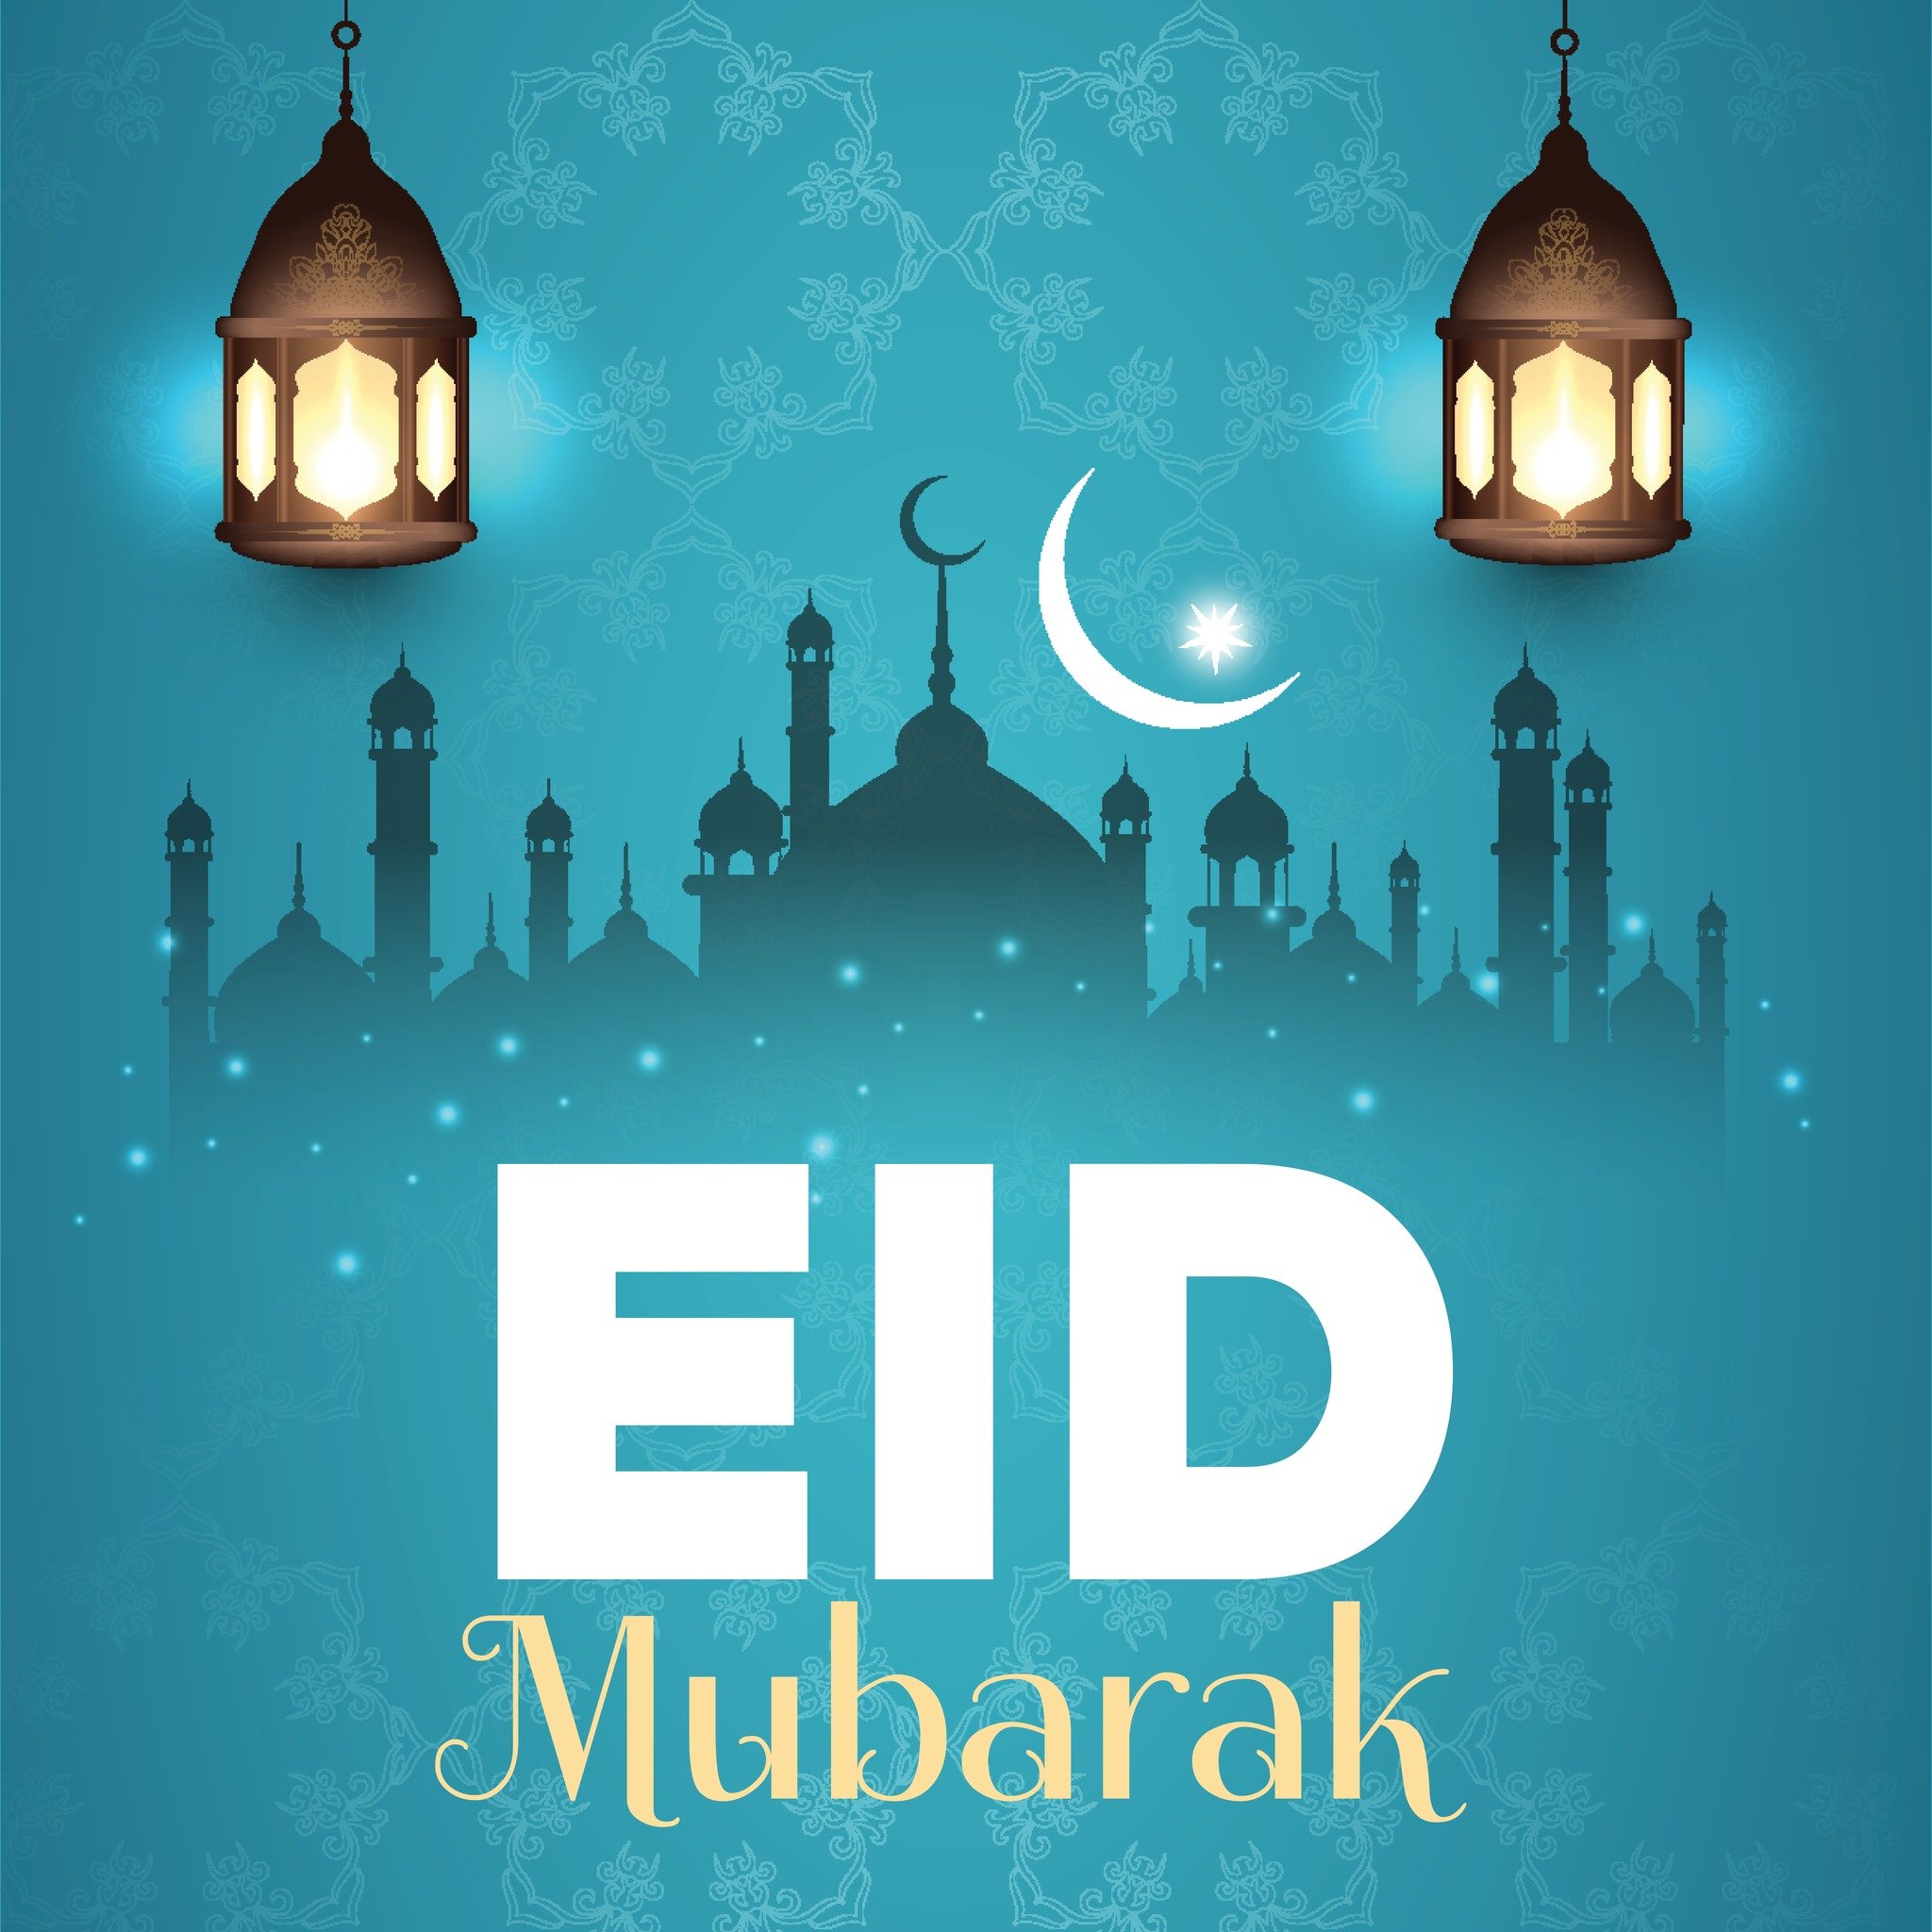 Wishing the Muslim communities across our state all the best as we reach Eid Al-Fitr. Eid Mubarak!